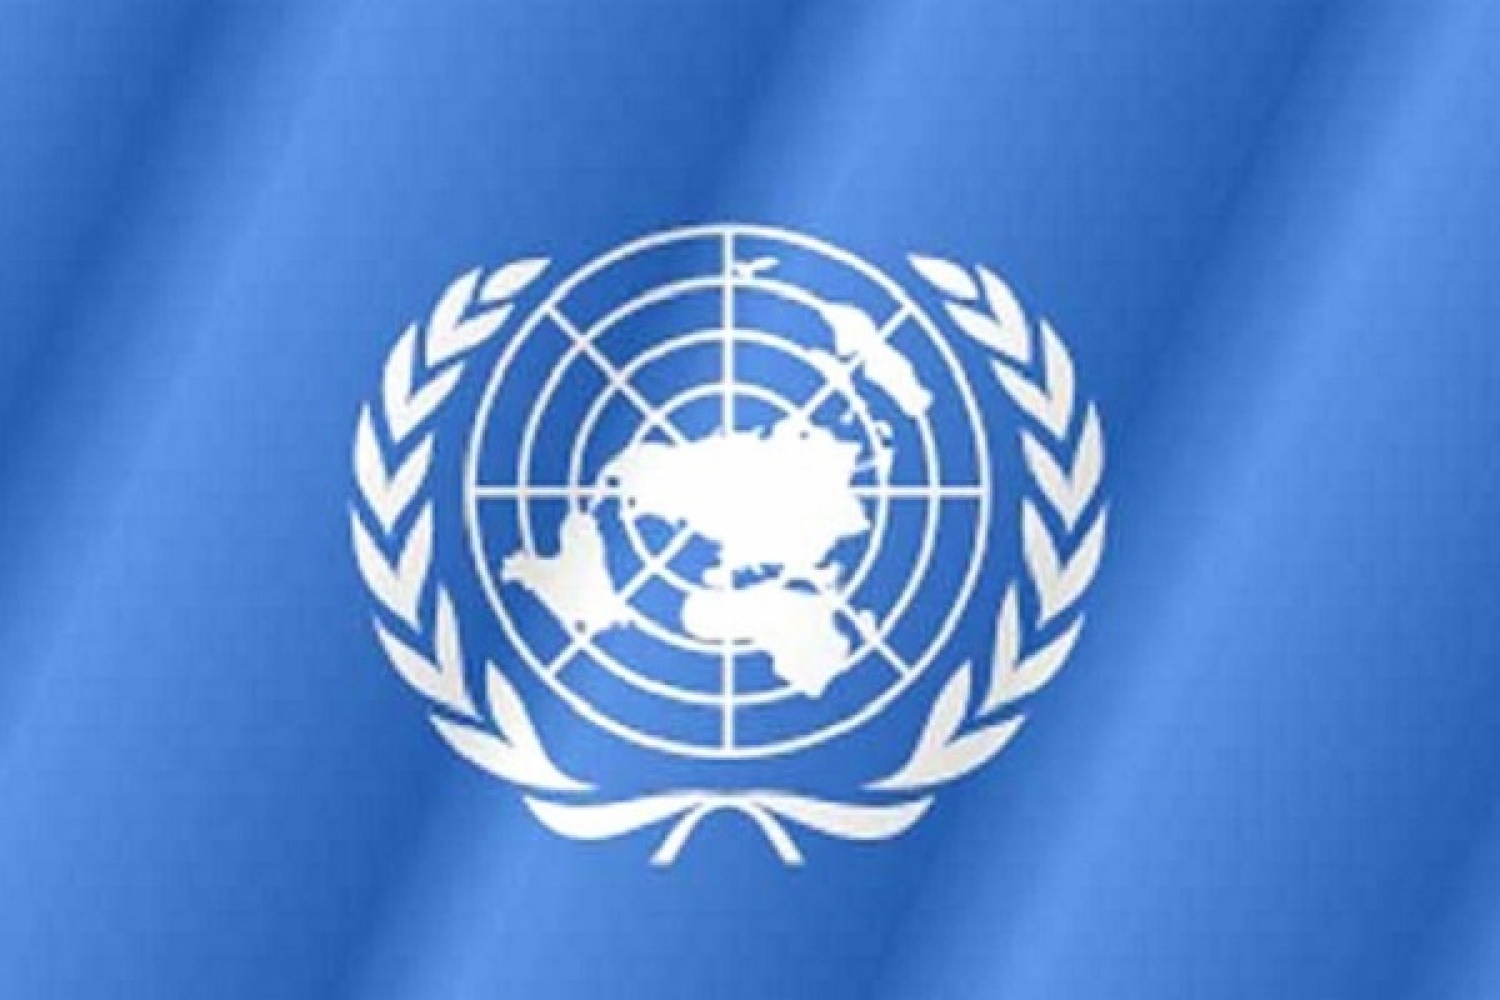 Цвета оон. Совет безопасности ООН флаг. Международные организации ООН. Совет безопасности ООН эмблема. Флаг организации Объединенных наций.